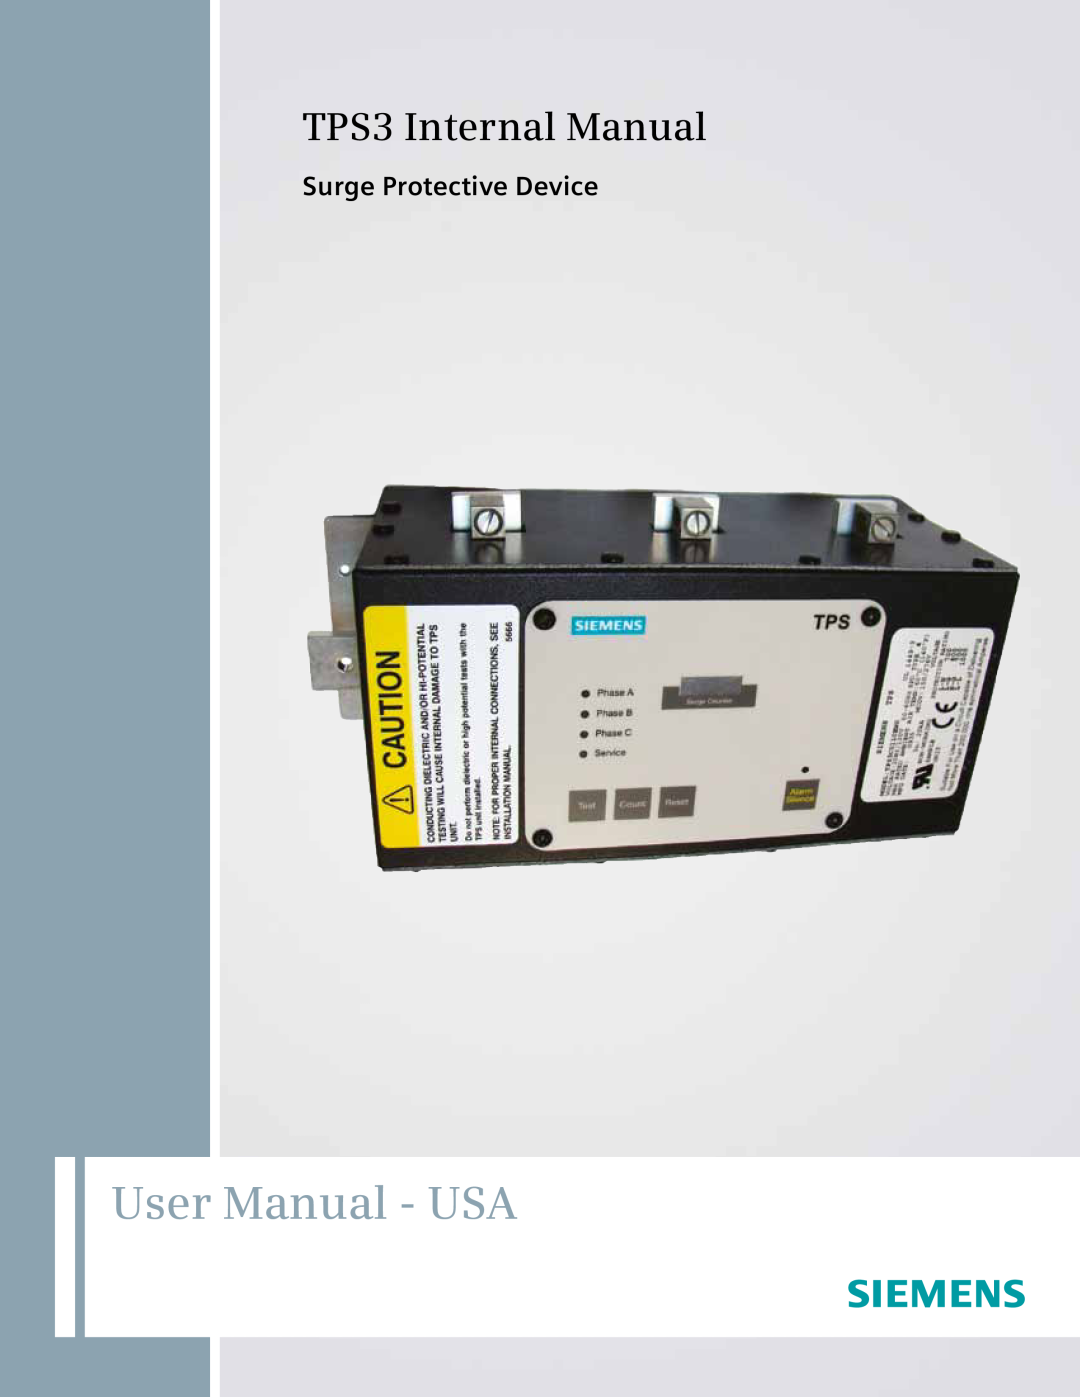 Siemens user manual User Manual - USA, TPS3 Internal Manual, Surge Protective Device 